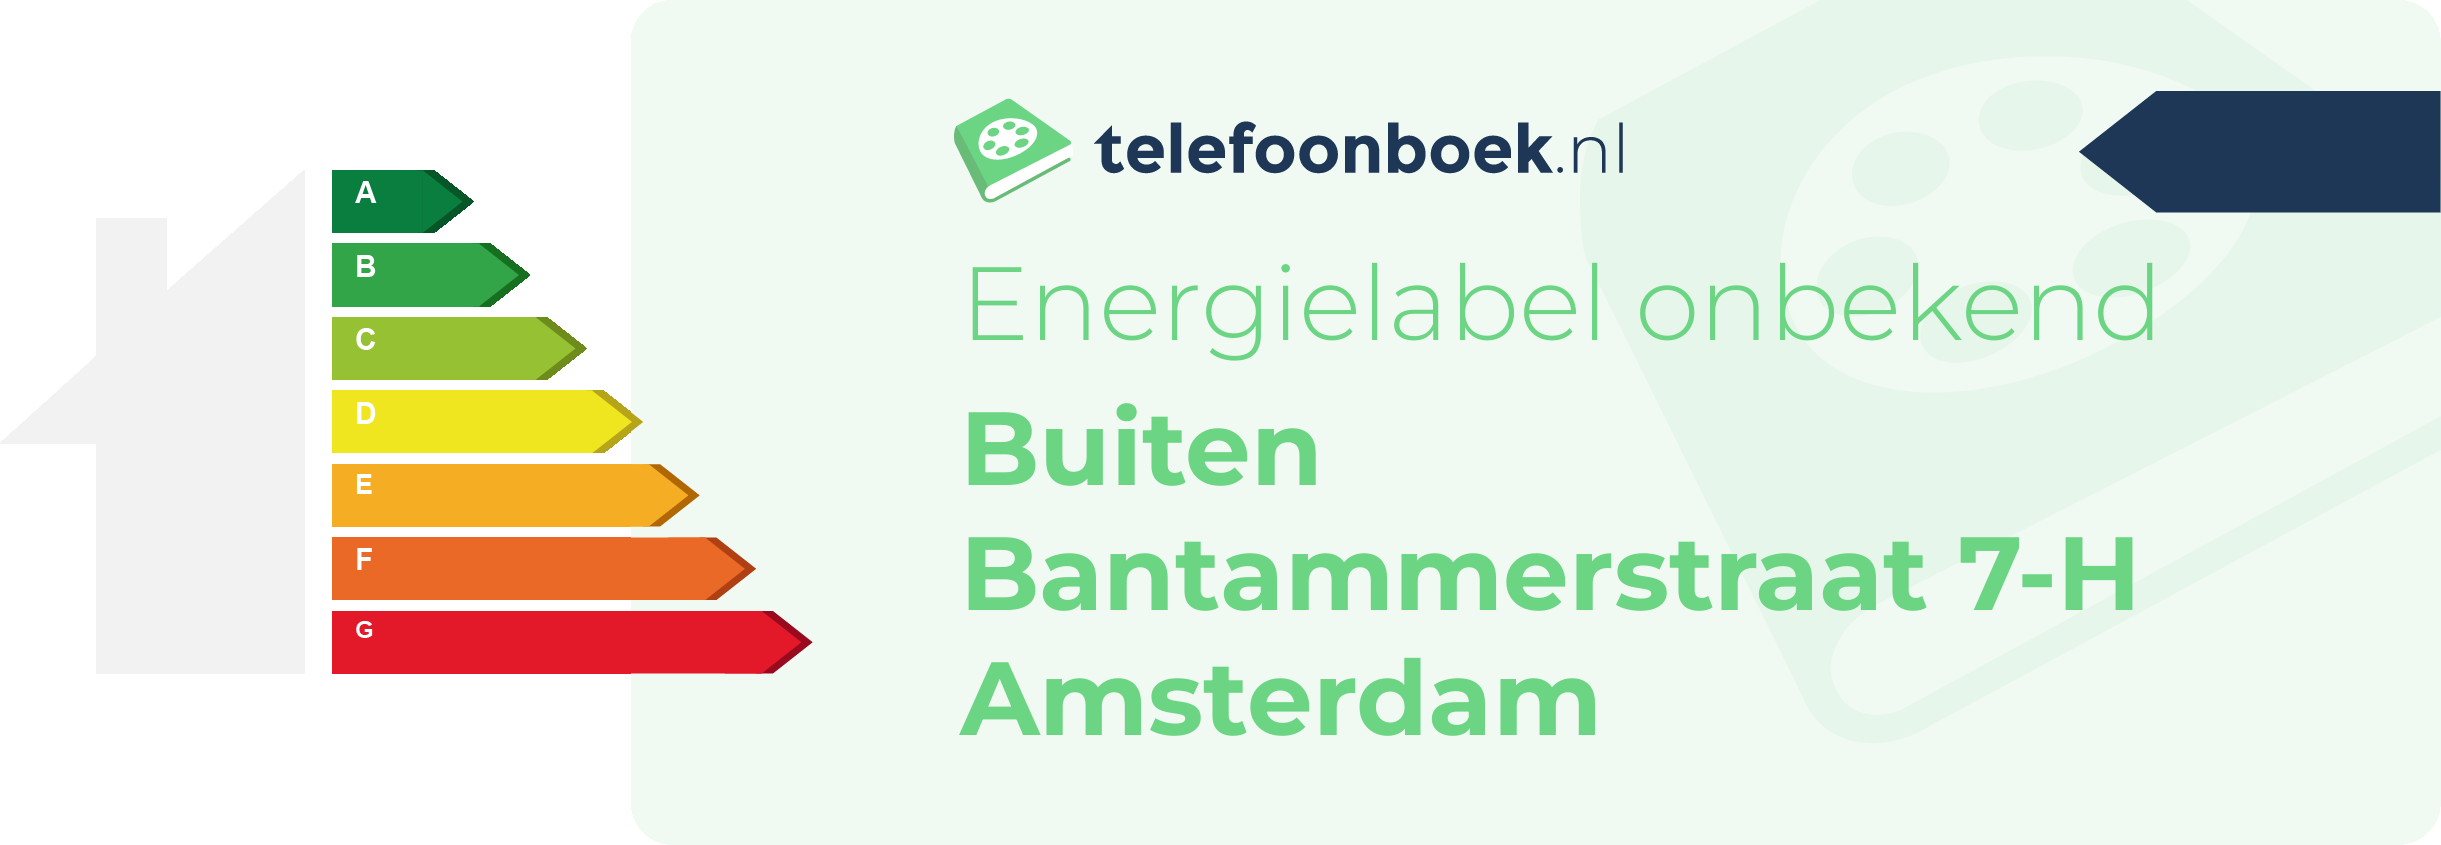 Energielabel Buiten Bantammerstraat 7-H Amsterdam